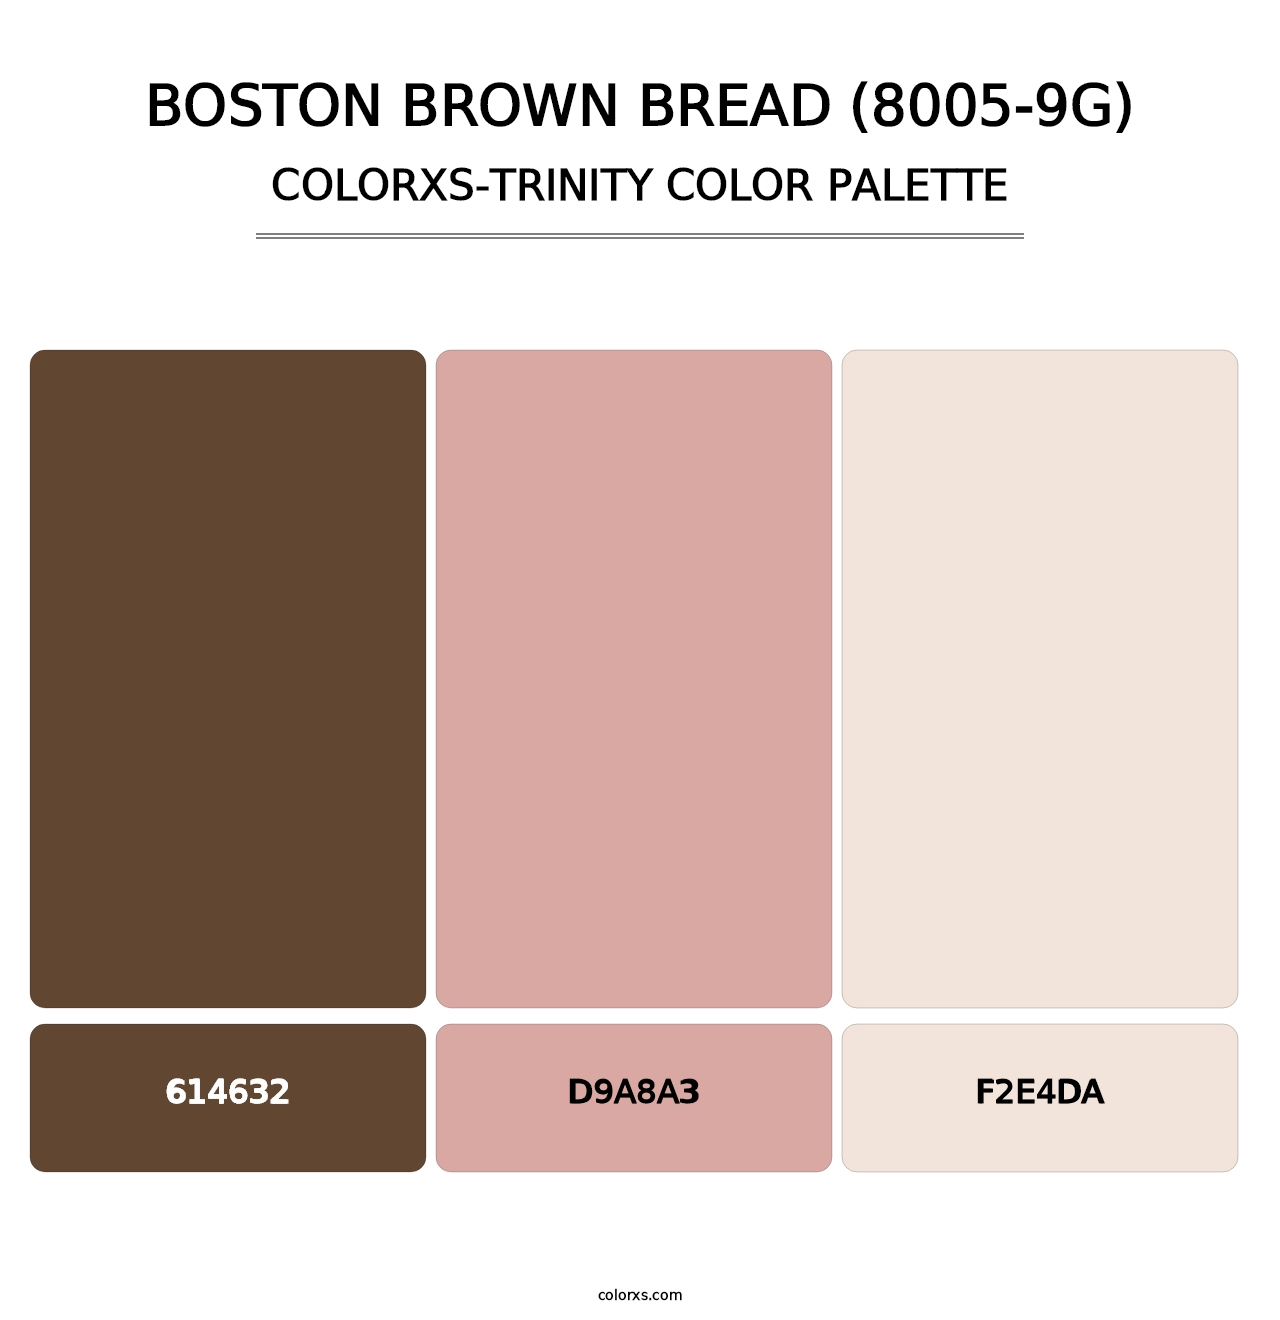 Boston Brown Bread (8005-9G) - Colorxs Trinity Palette